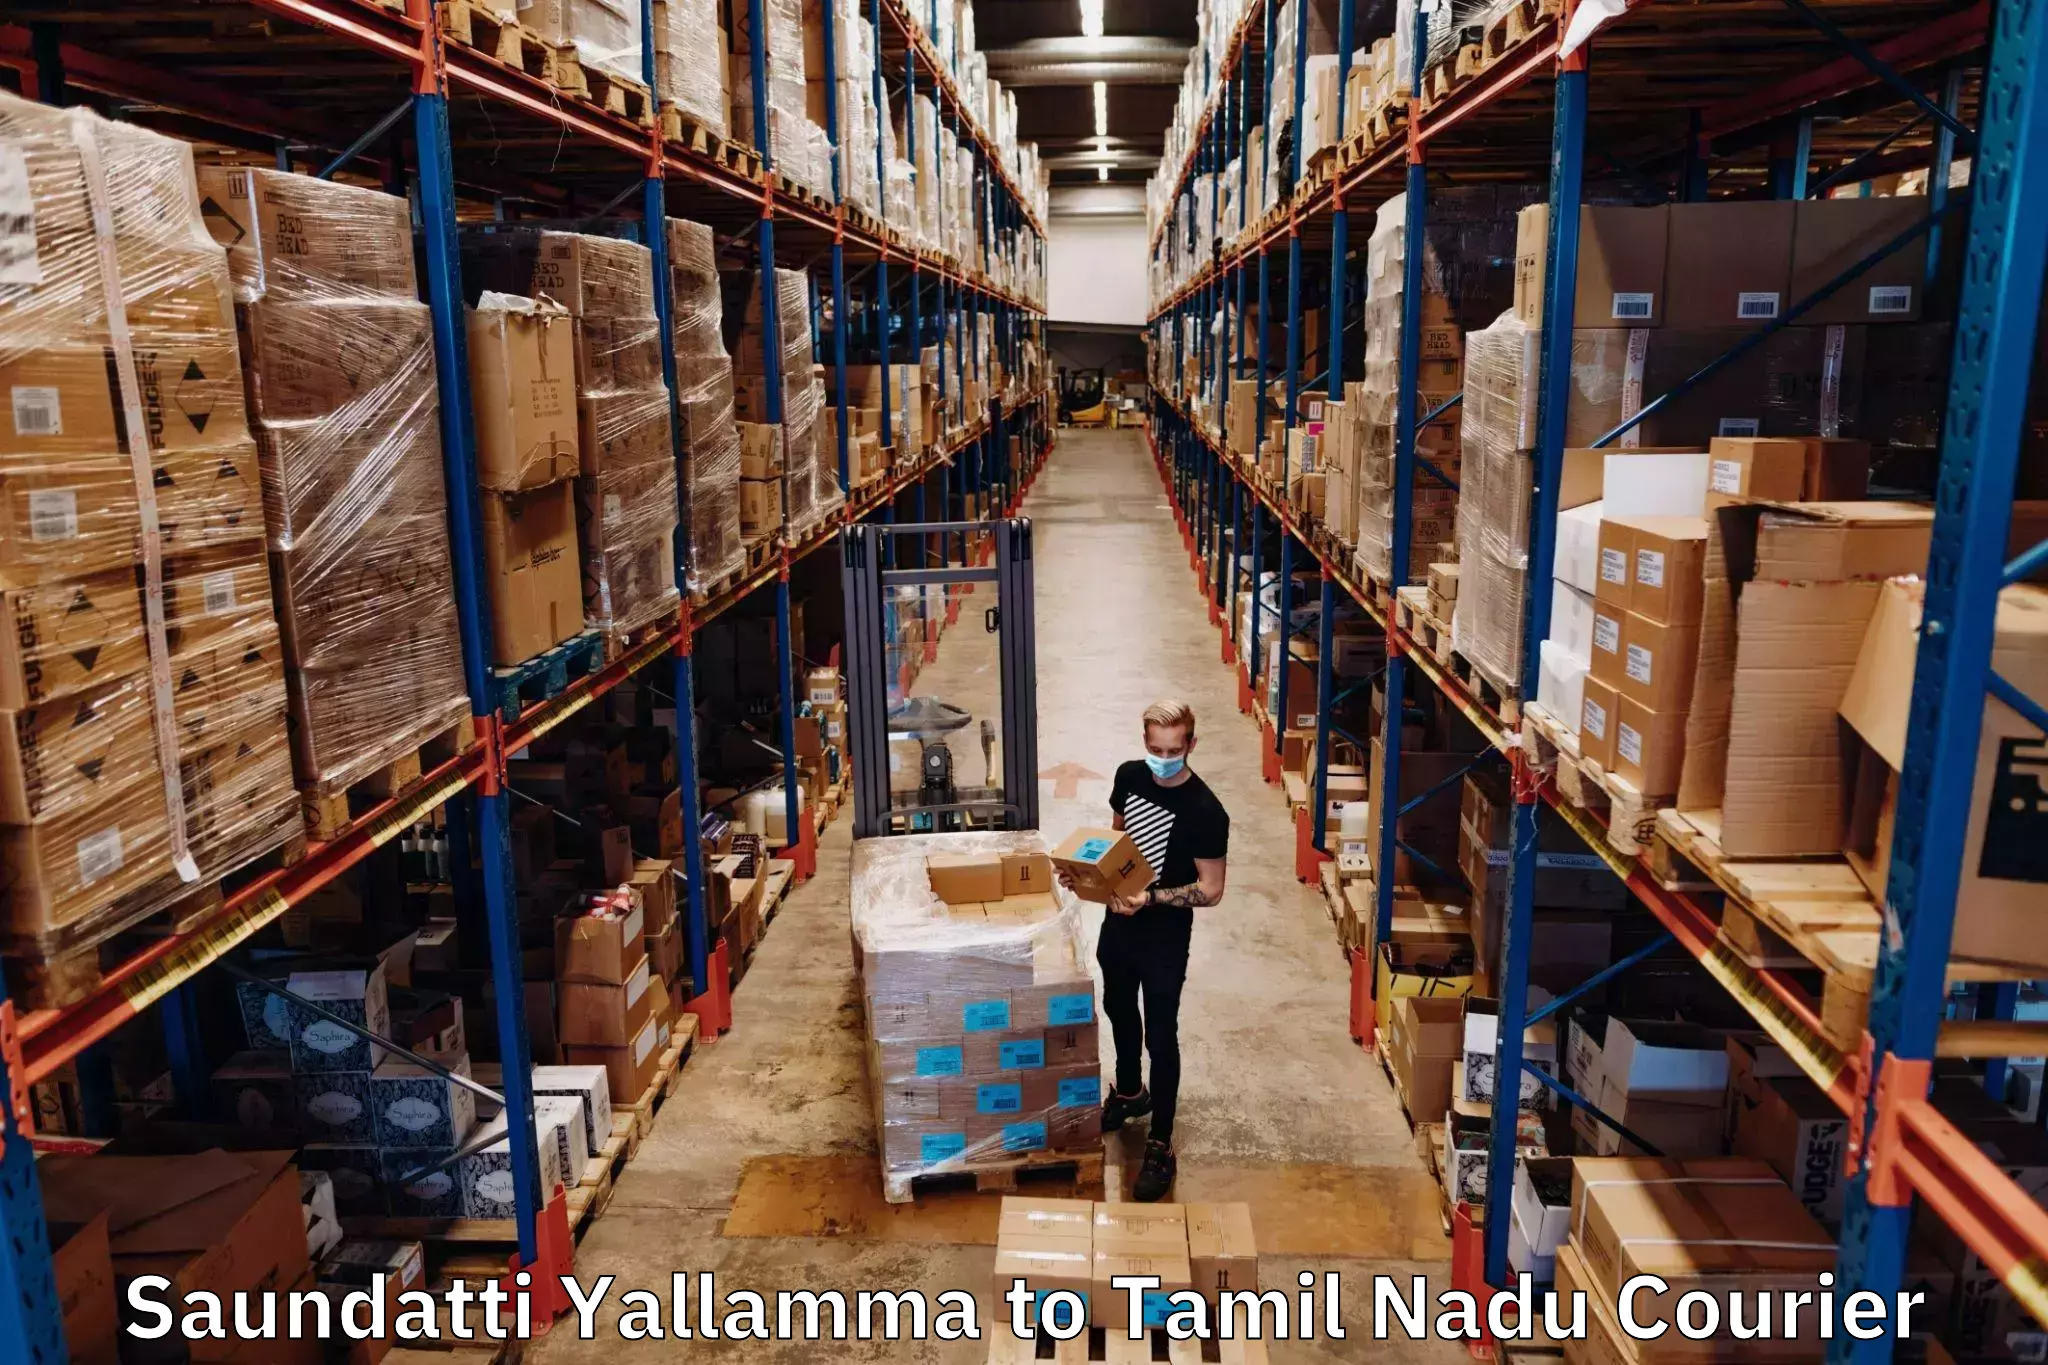 Professional courier handling Saundatti Yallamma to Cuddalore